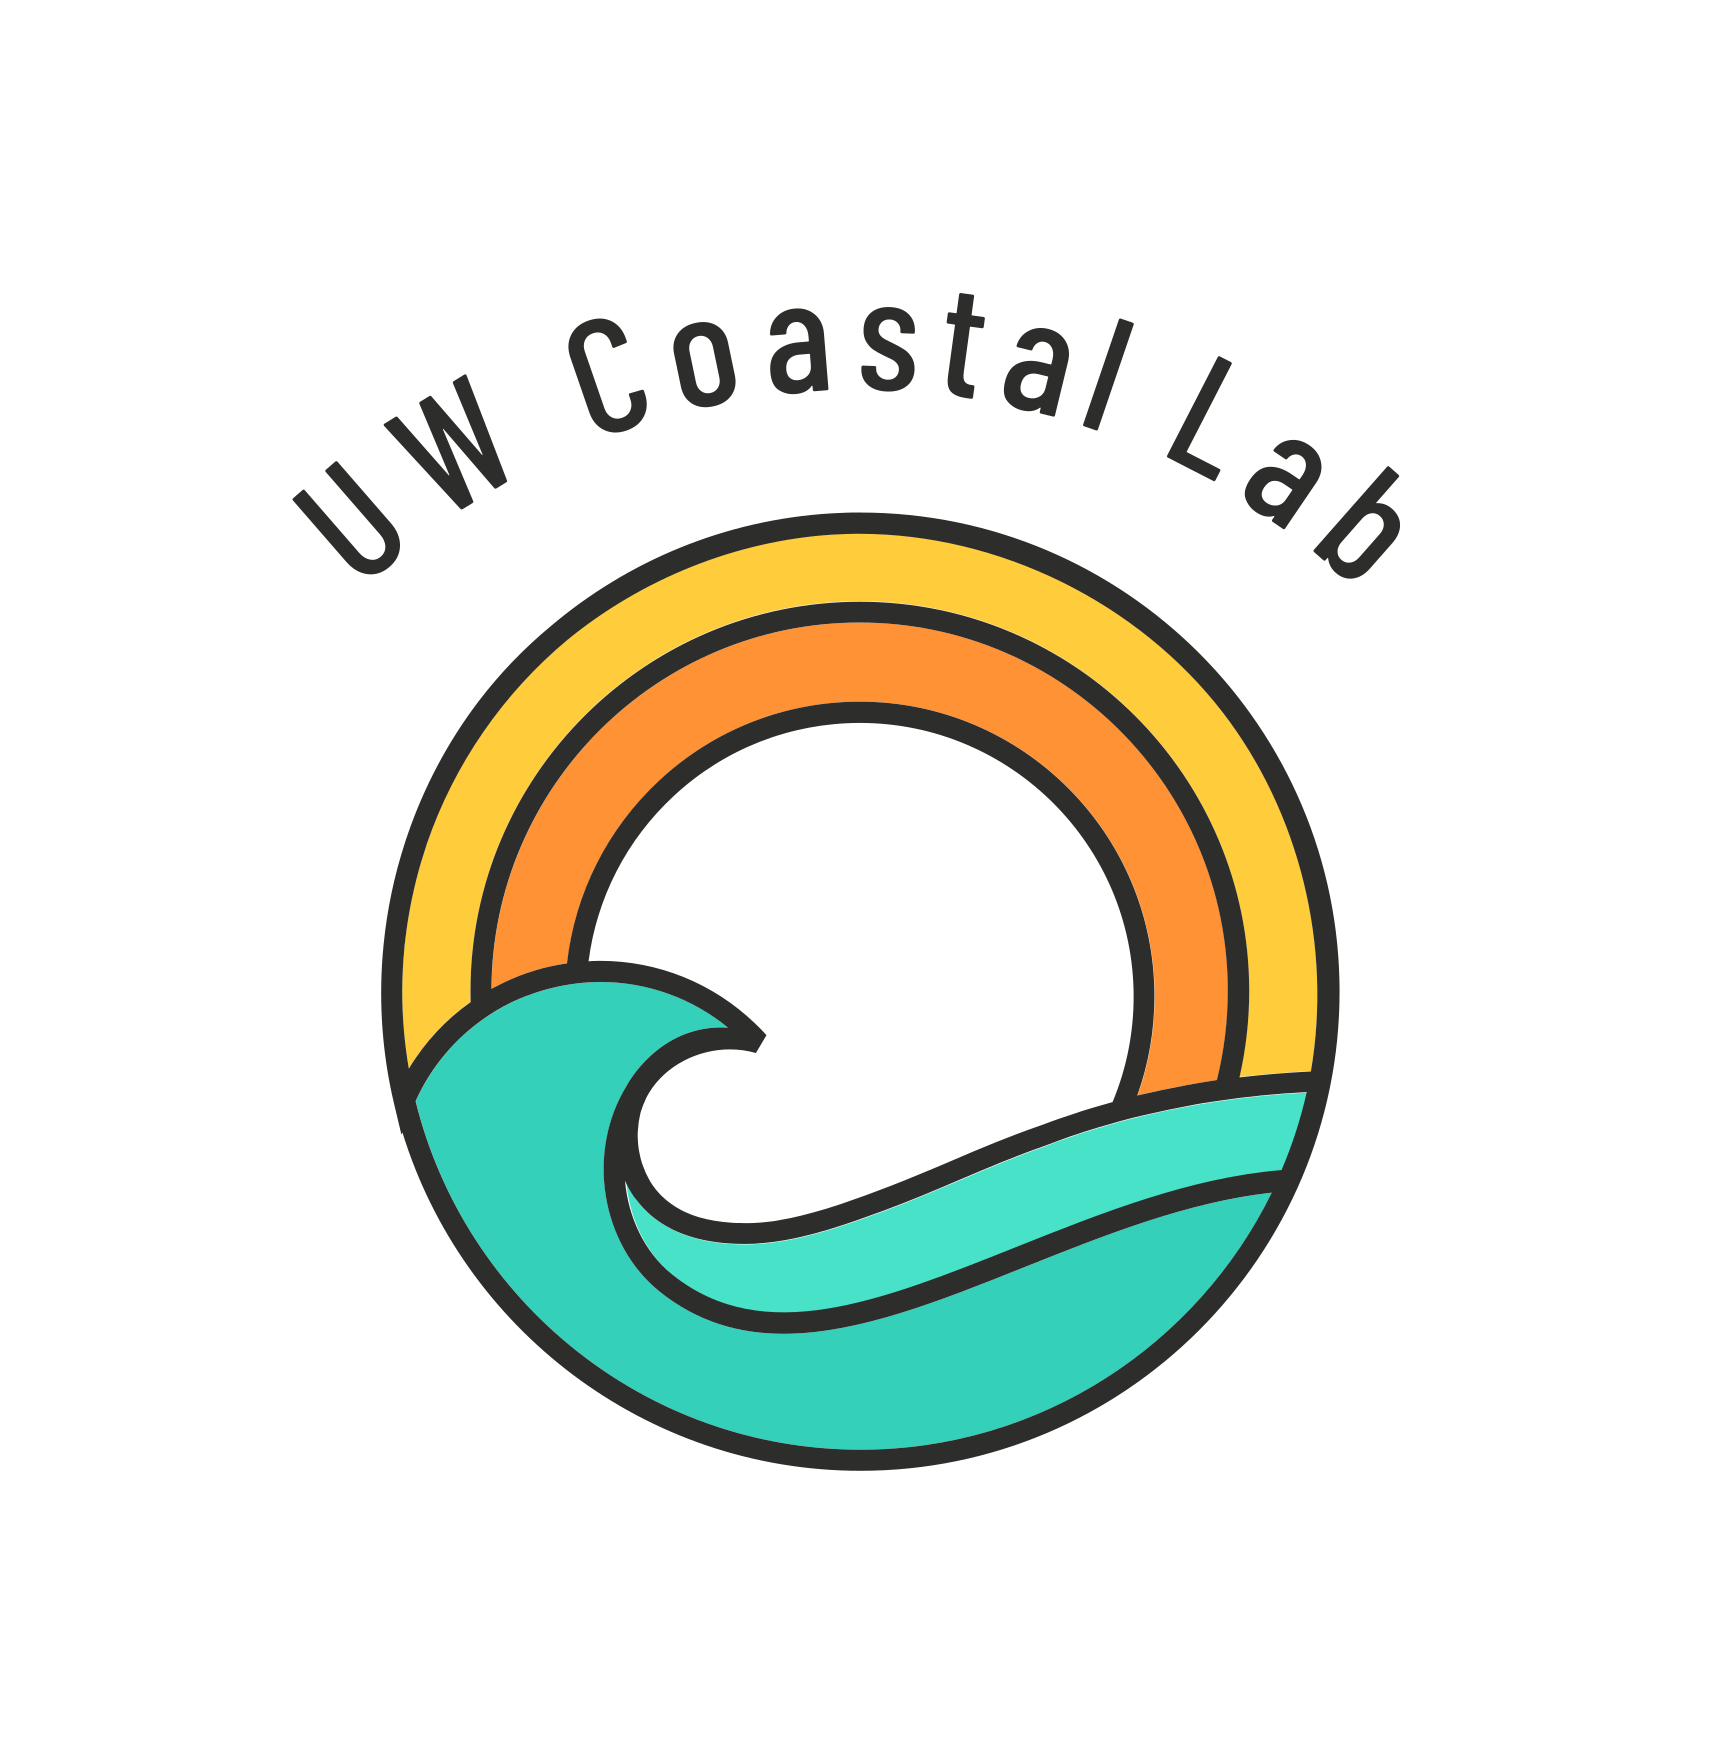 UW Coastal Lab